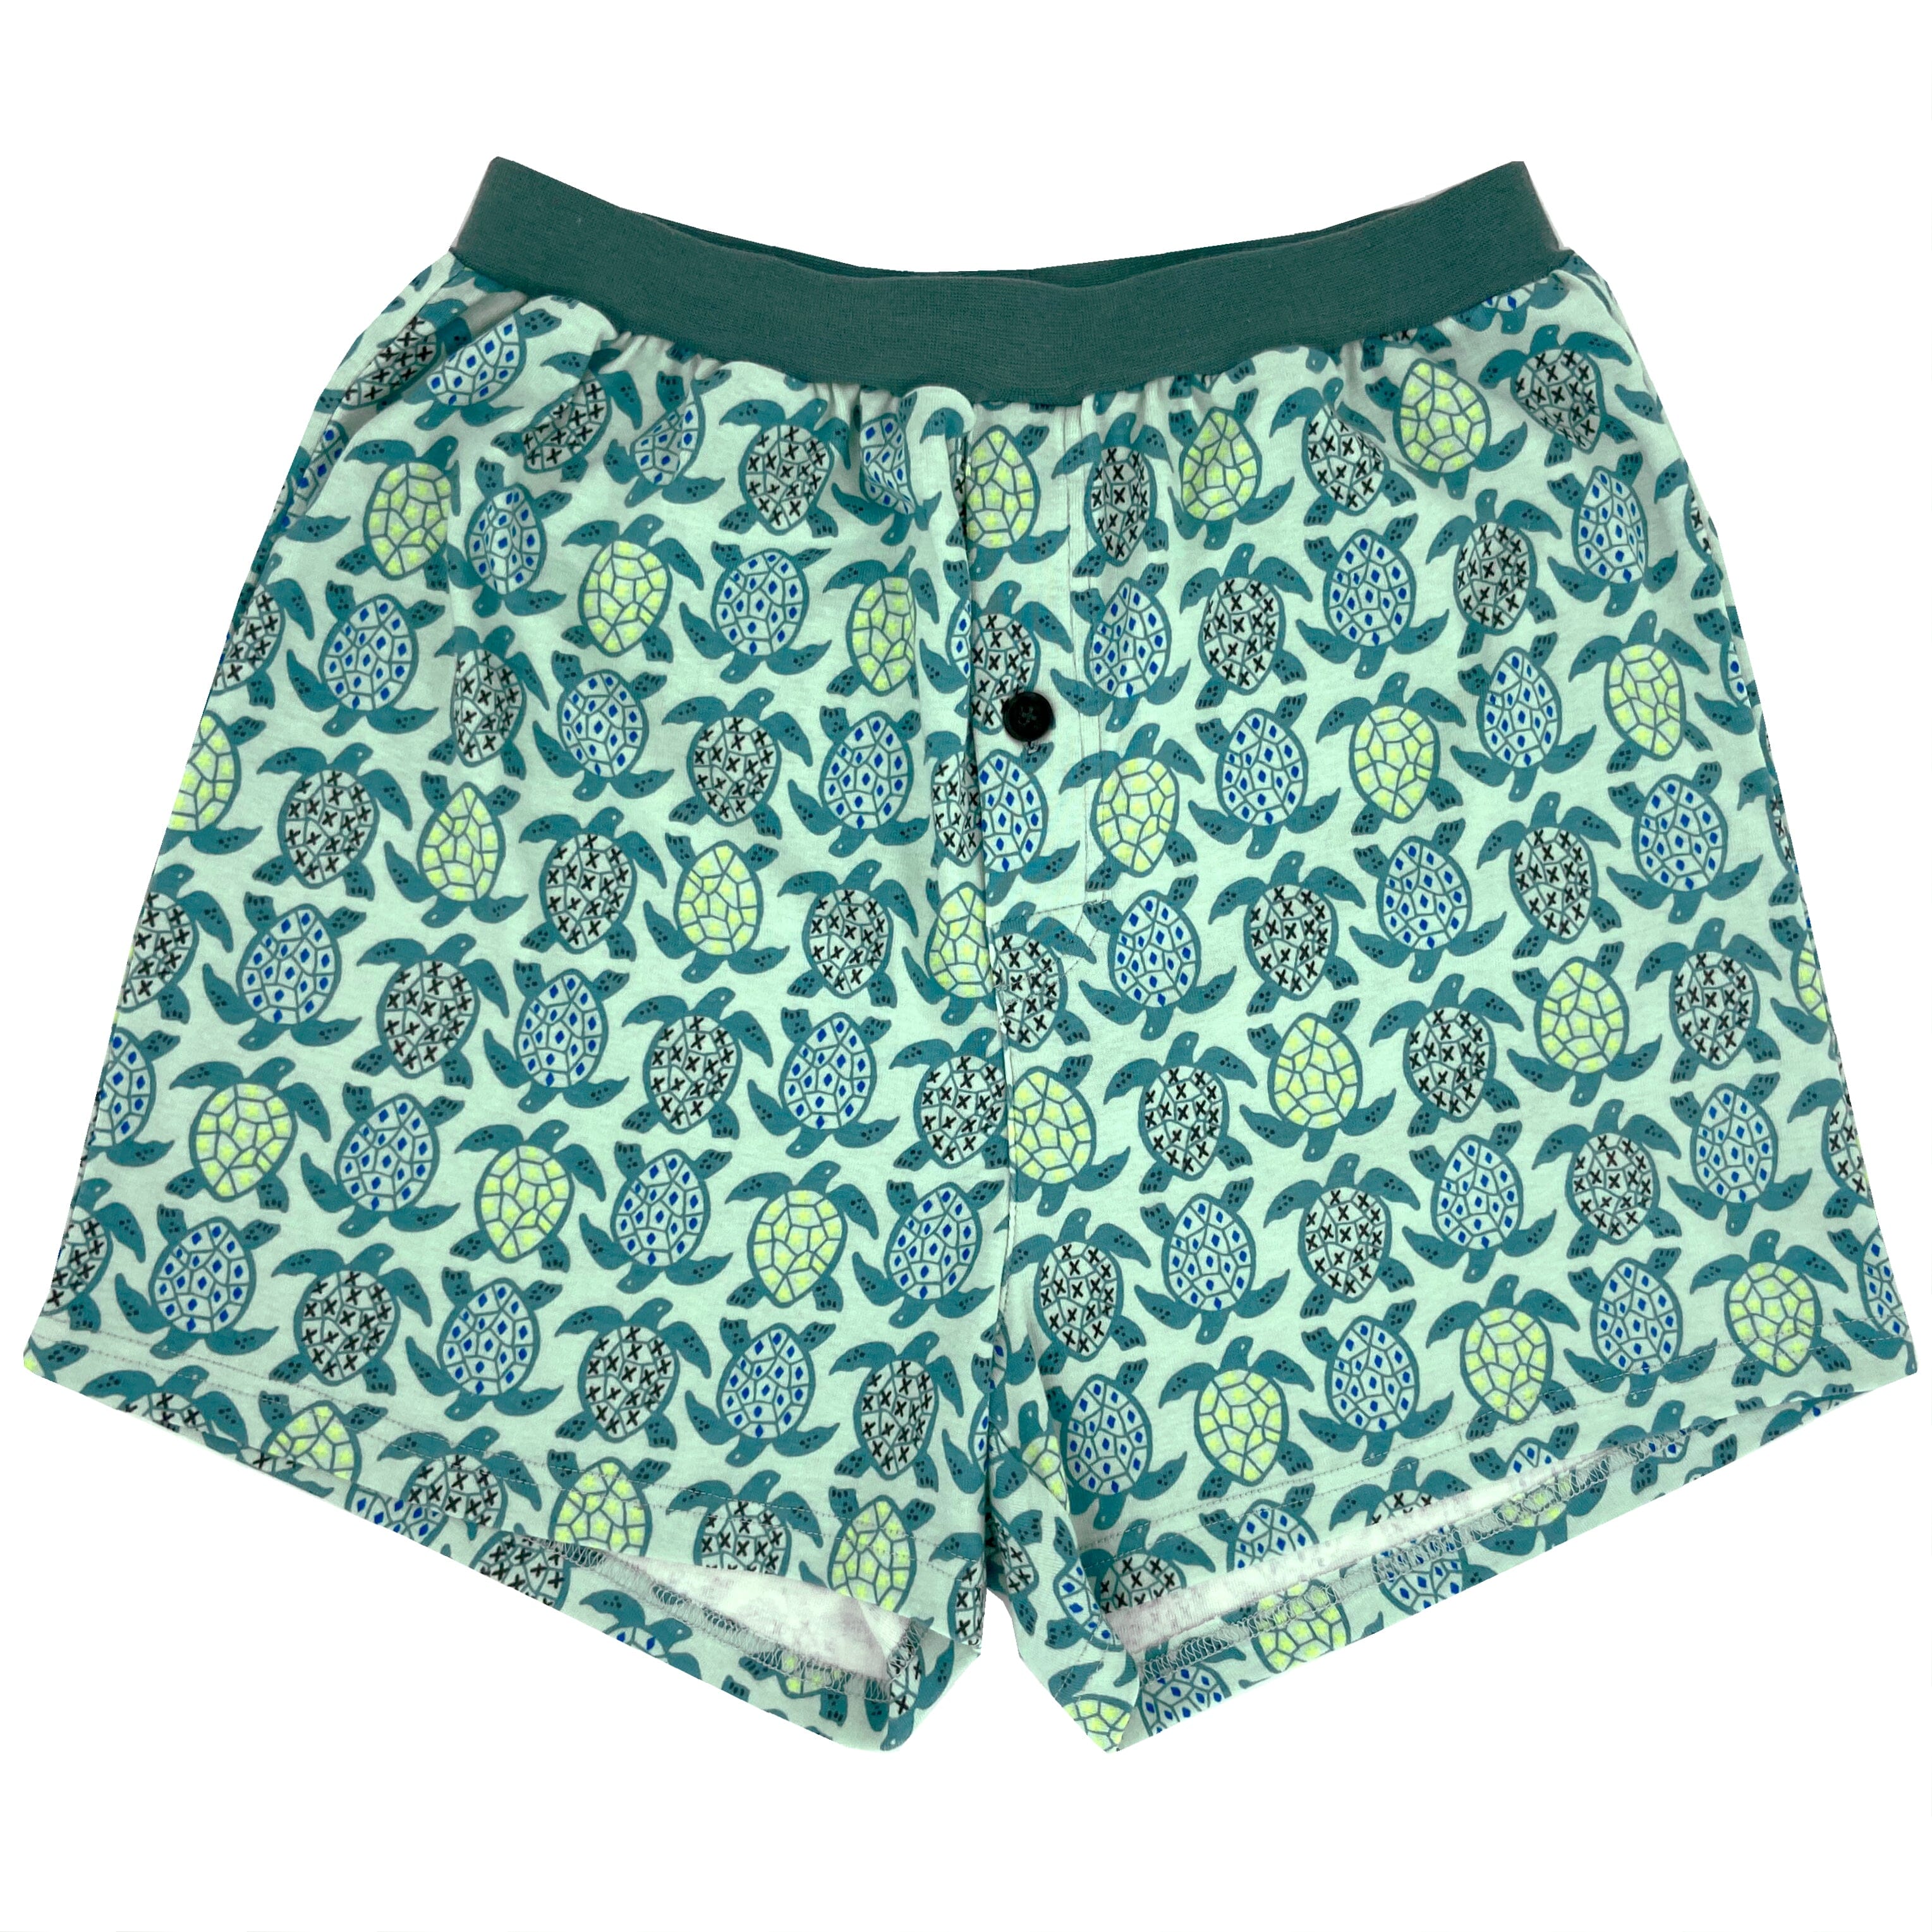 Marine Sea Turtle Patterned Cotton Knit Boxer Pajama Shorts for Men